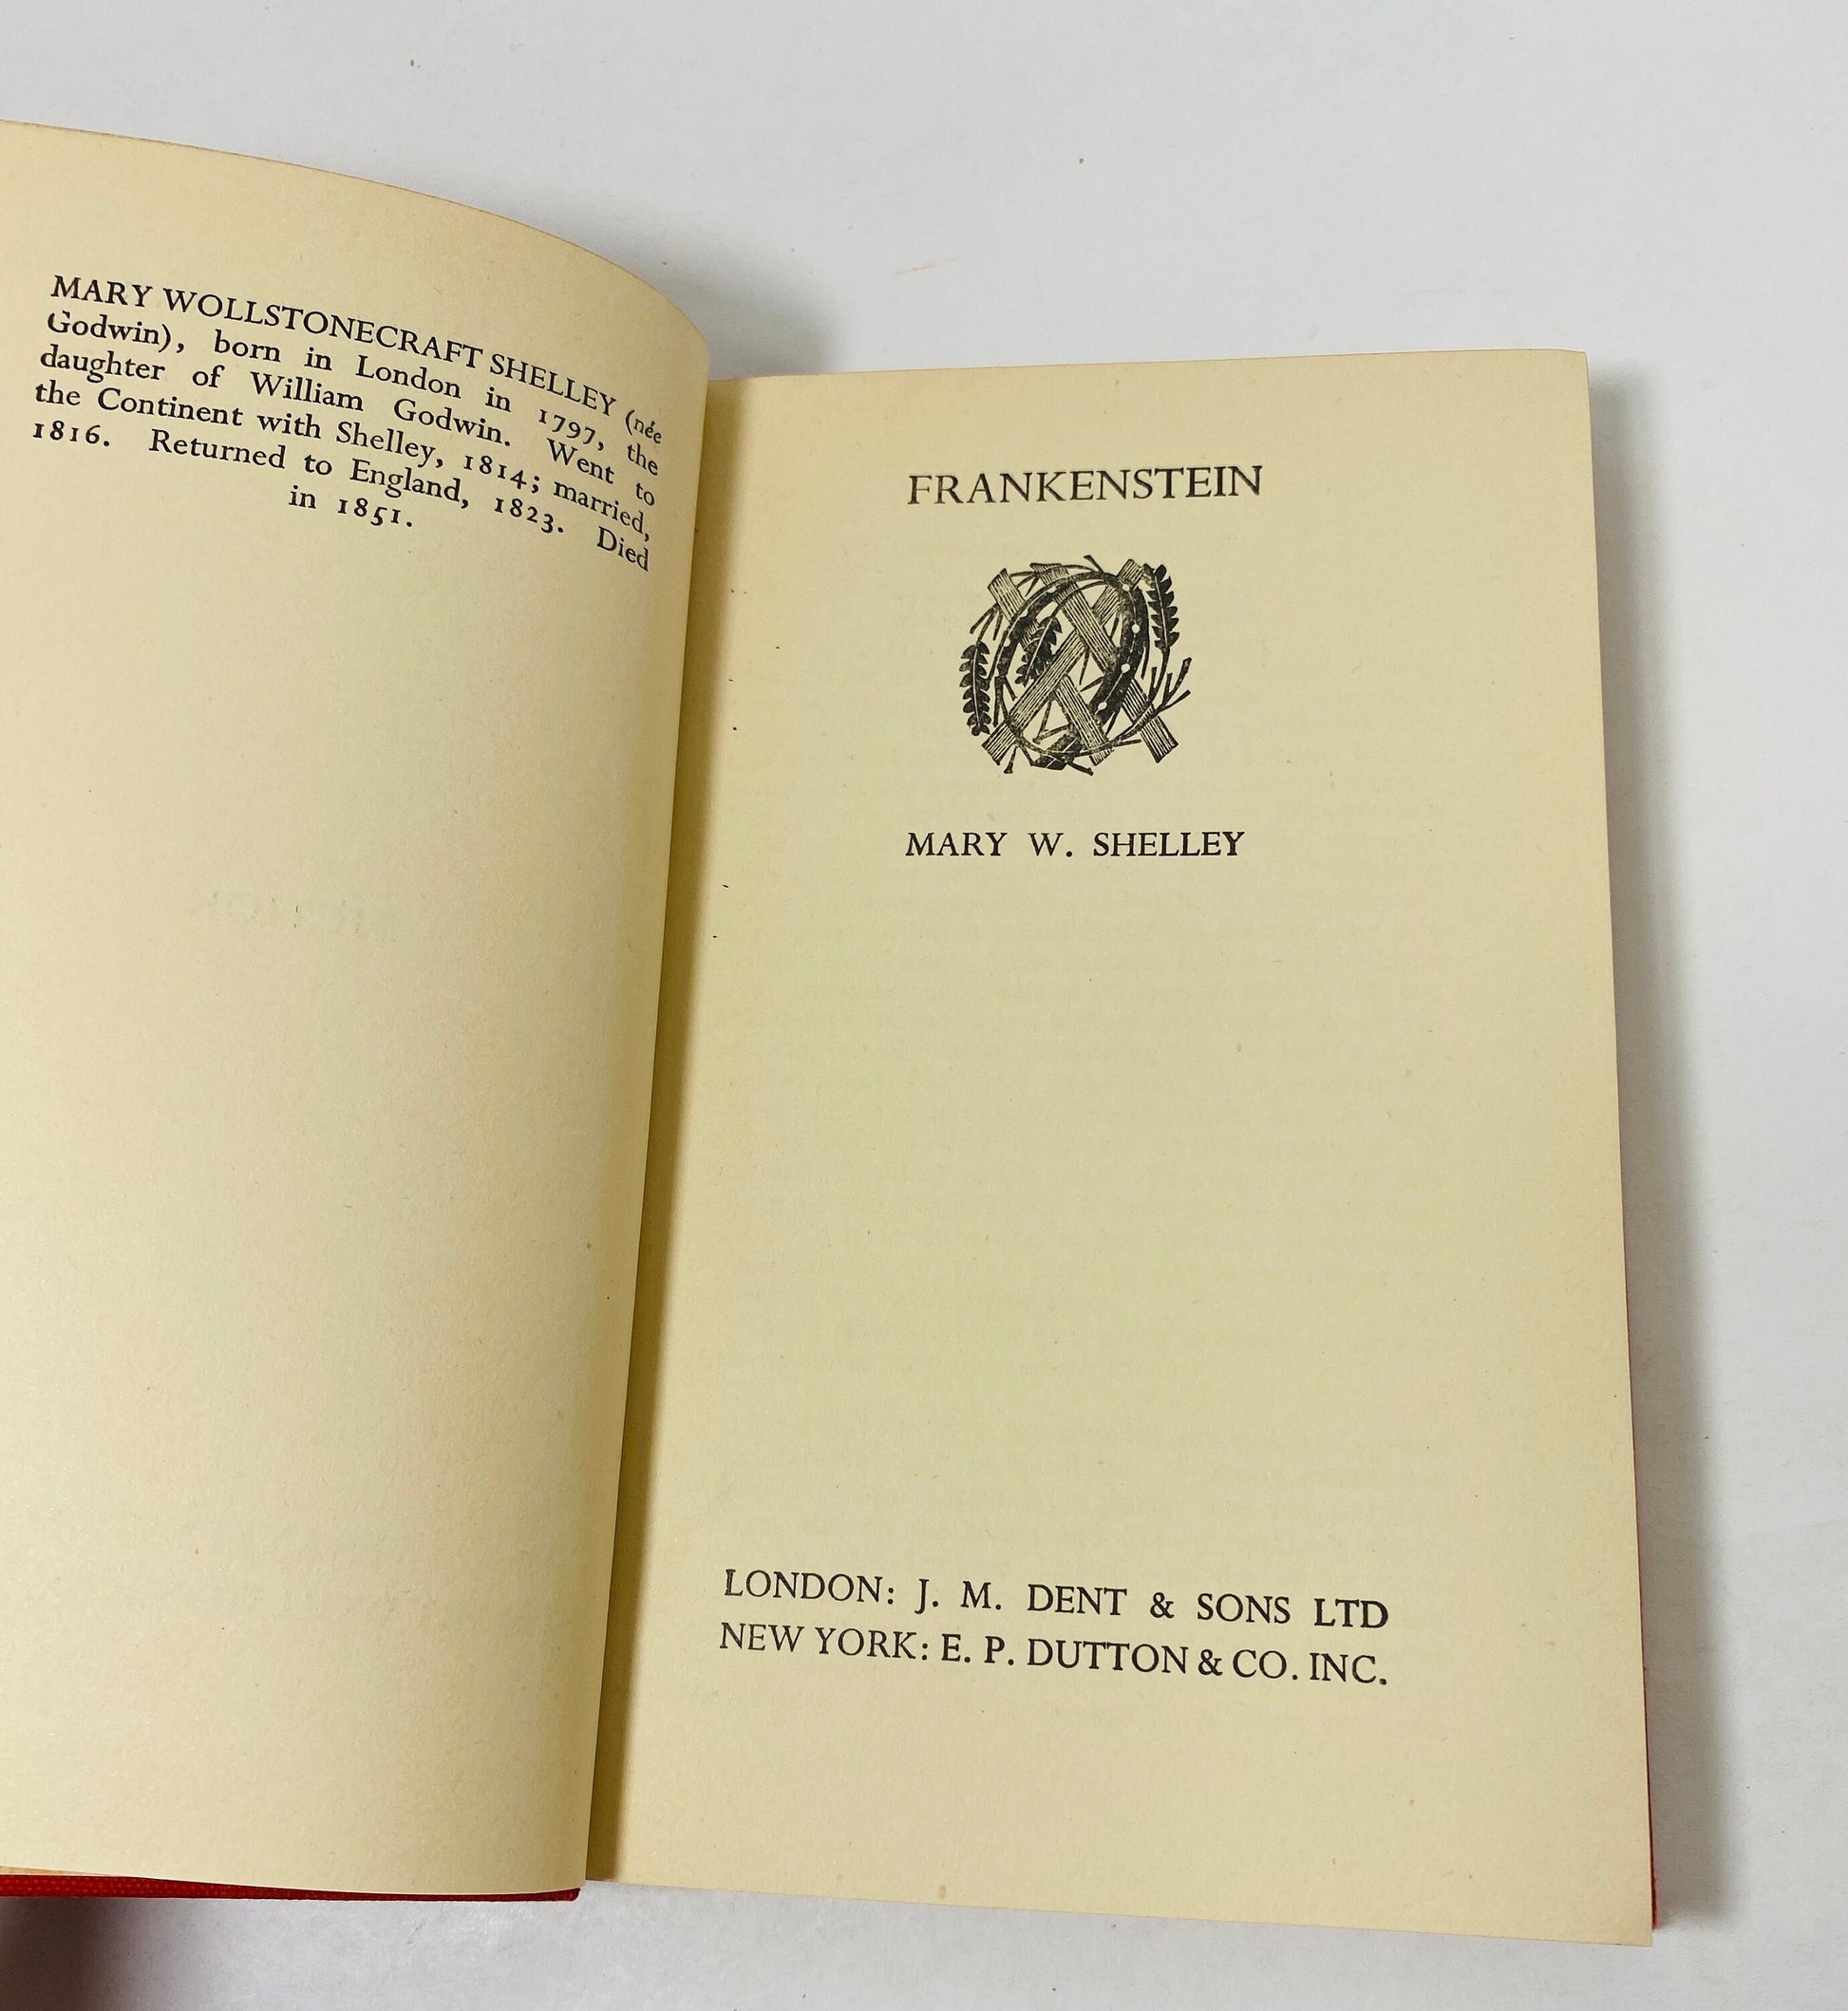 1930 Frankenstein by Mary Shelley vintage book Modern Prometheus Rare Valentine's Day antique gift